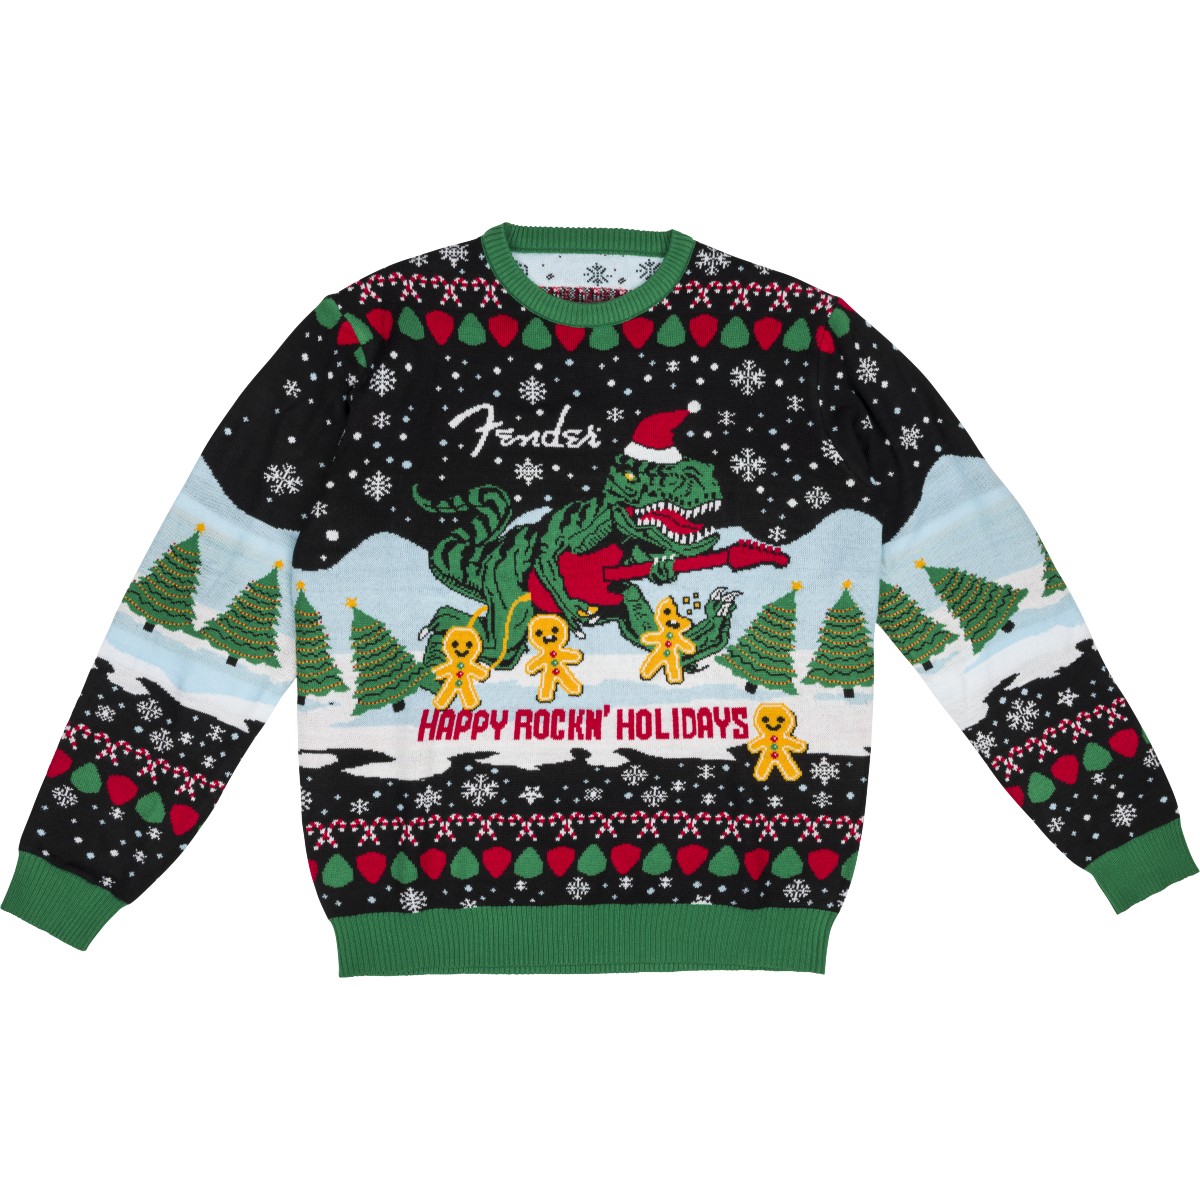 Felpa fender ugly christmas sweater,2023, multi, xxl 9194222806